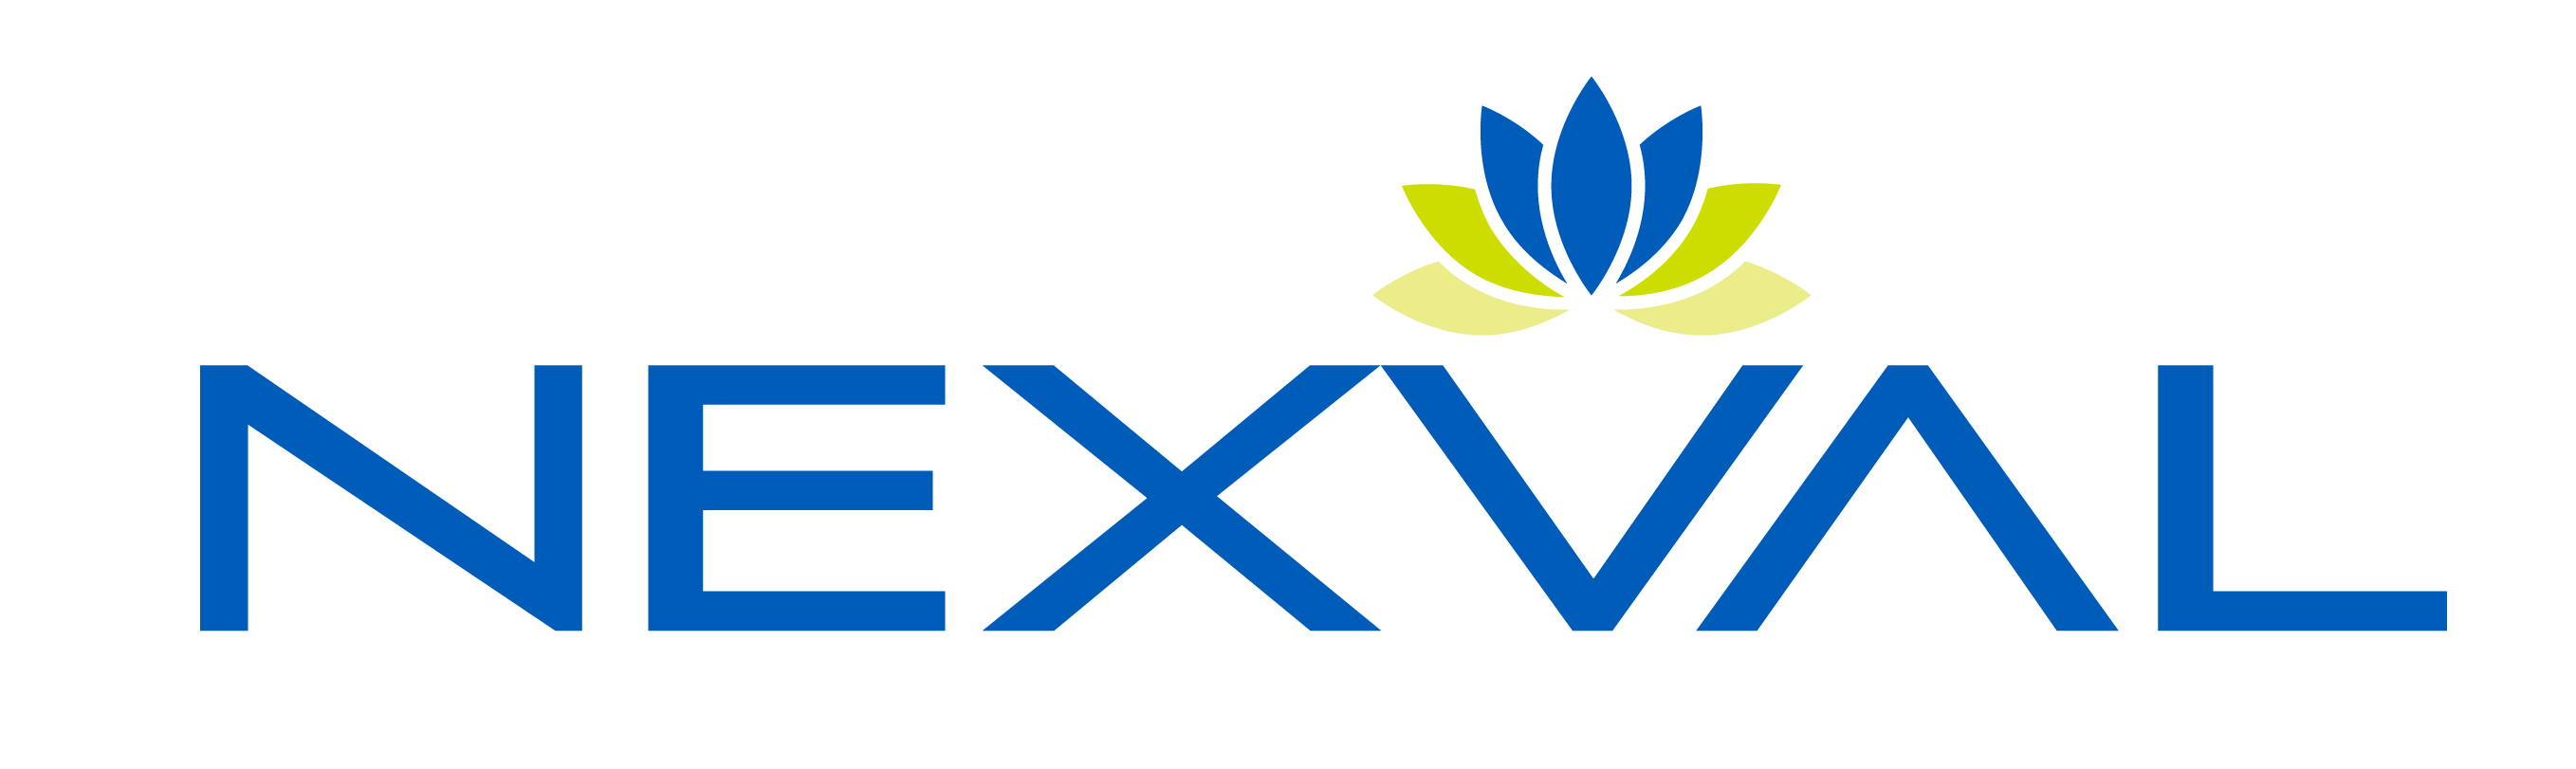 nexval mortgage tech guru logo